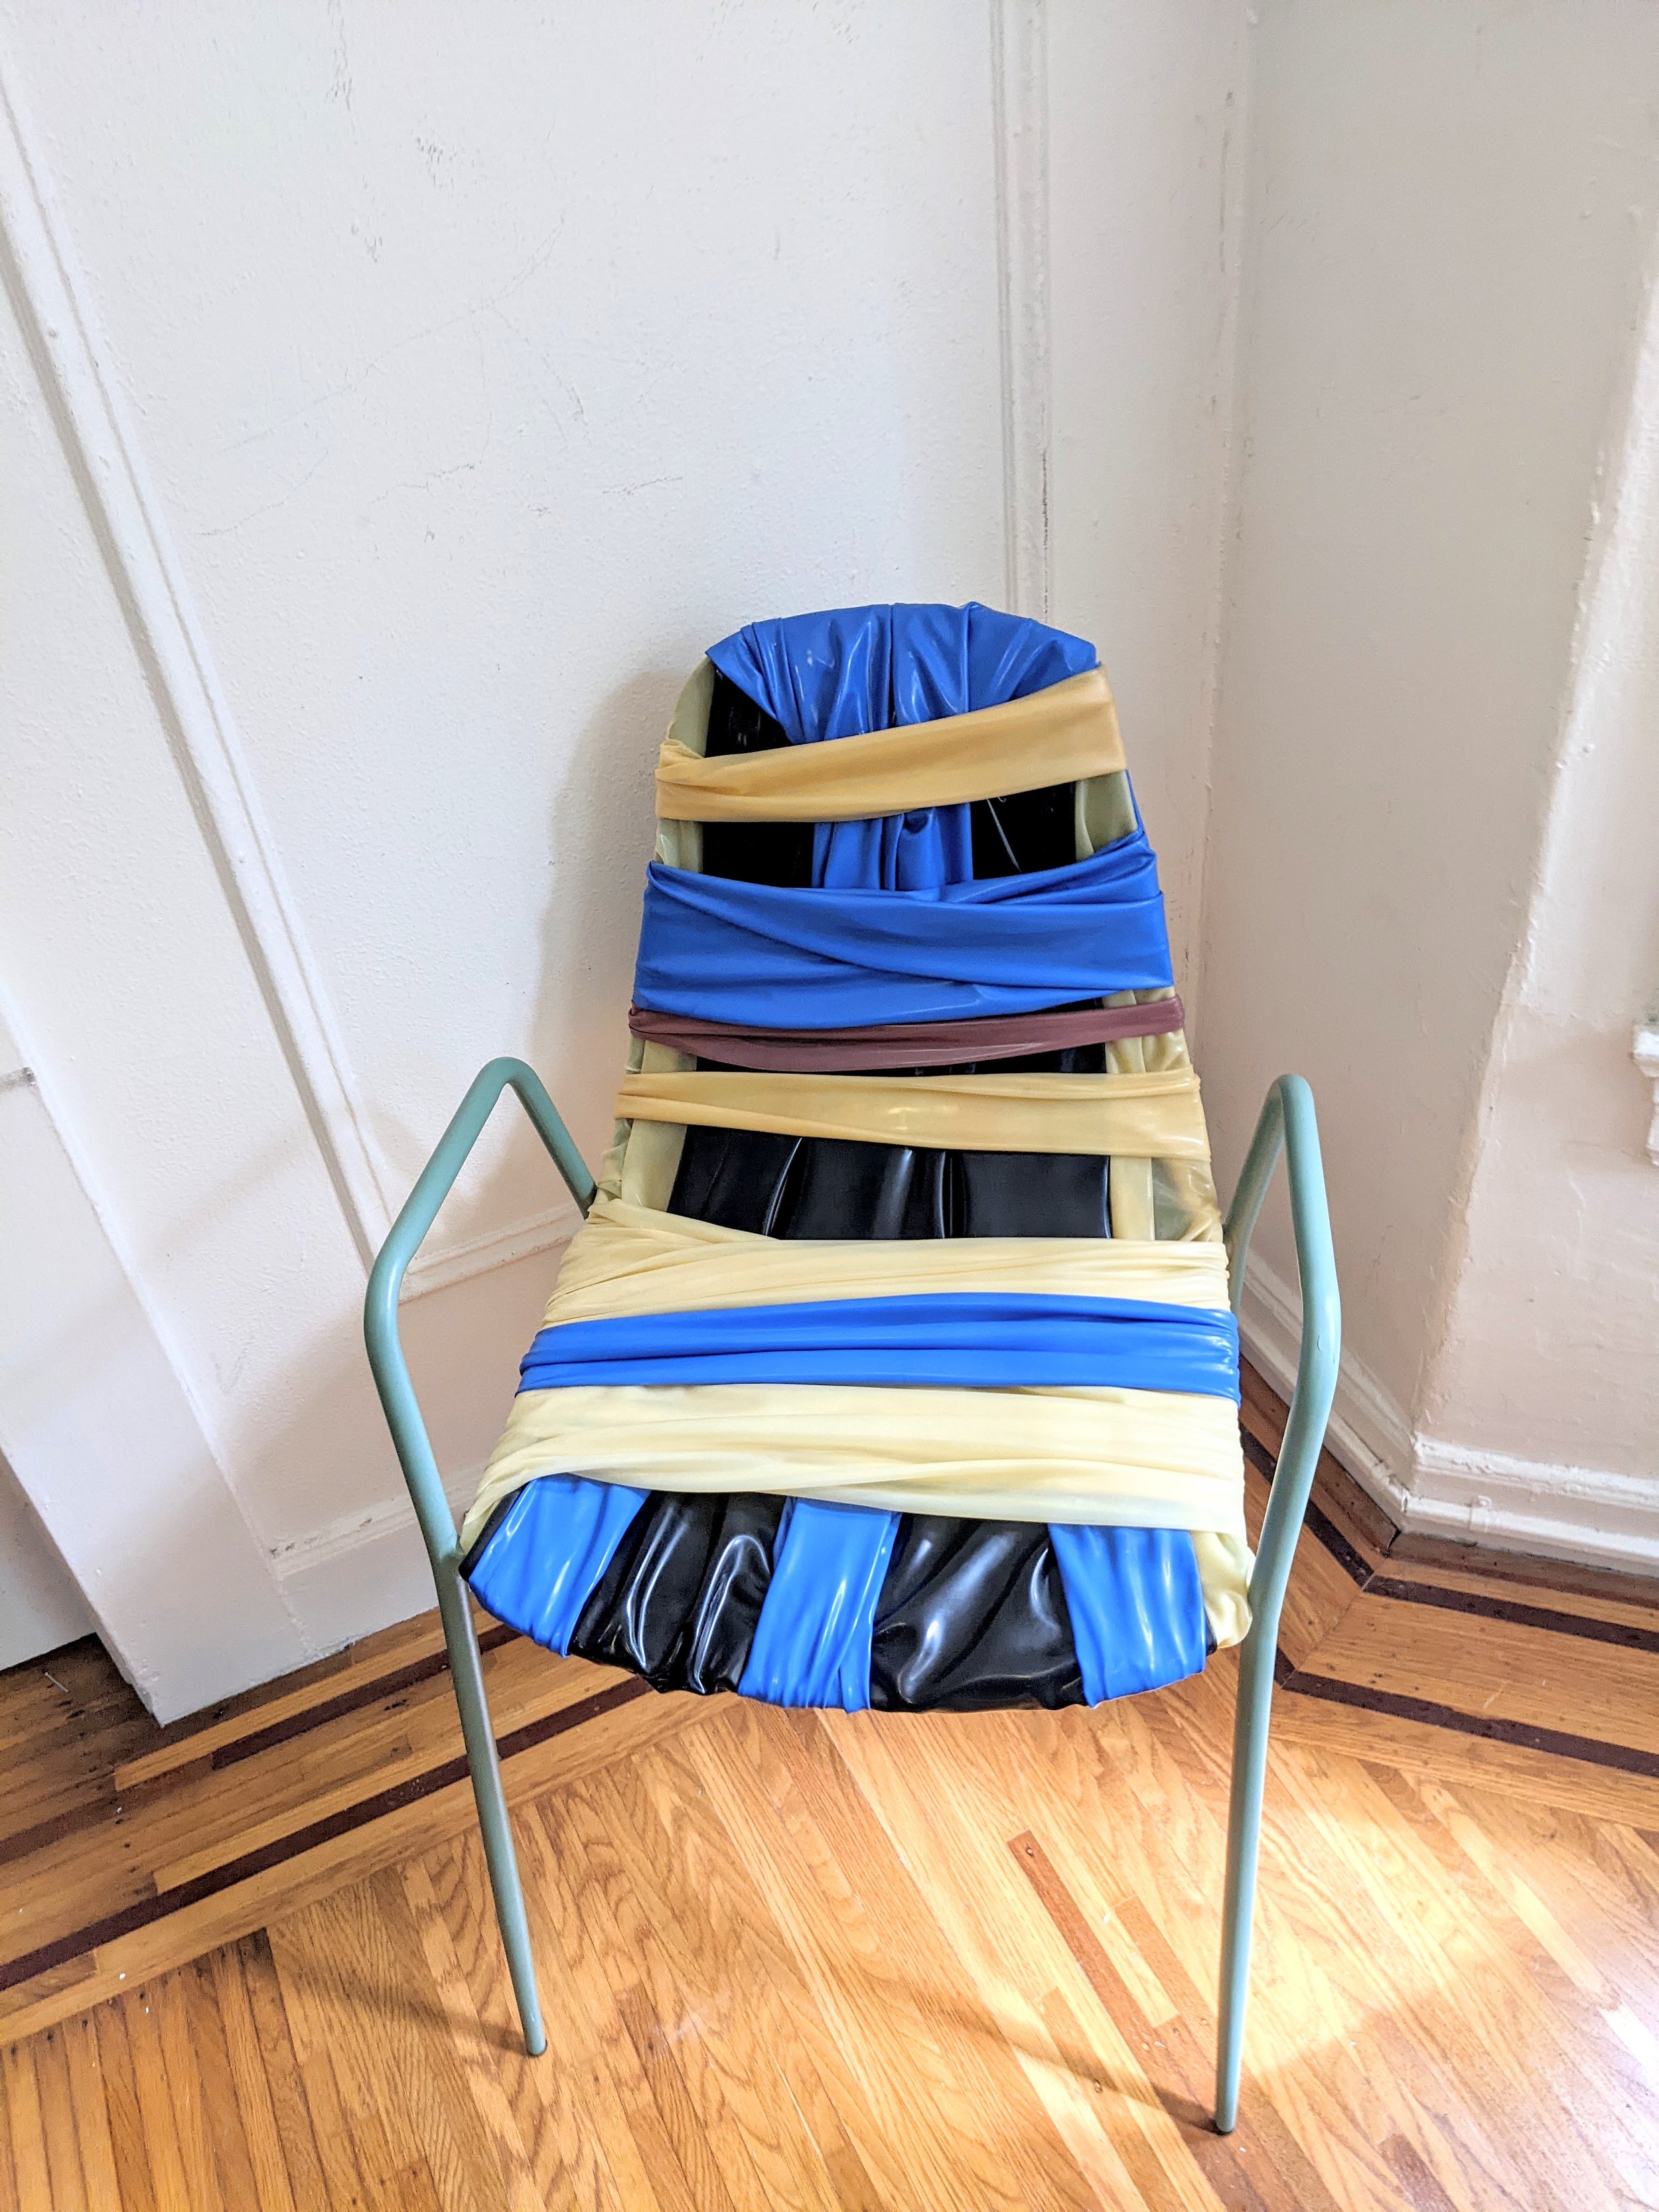 Gummistuhl (Rubber Chair)